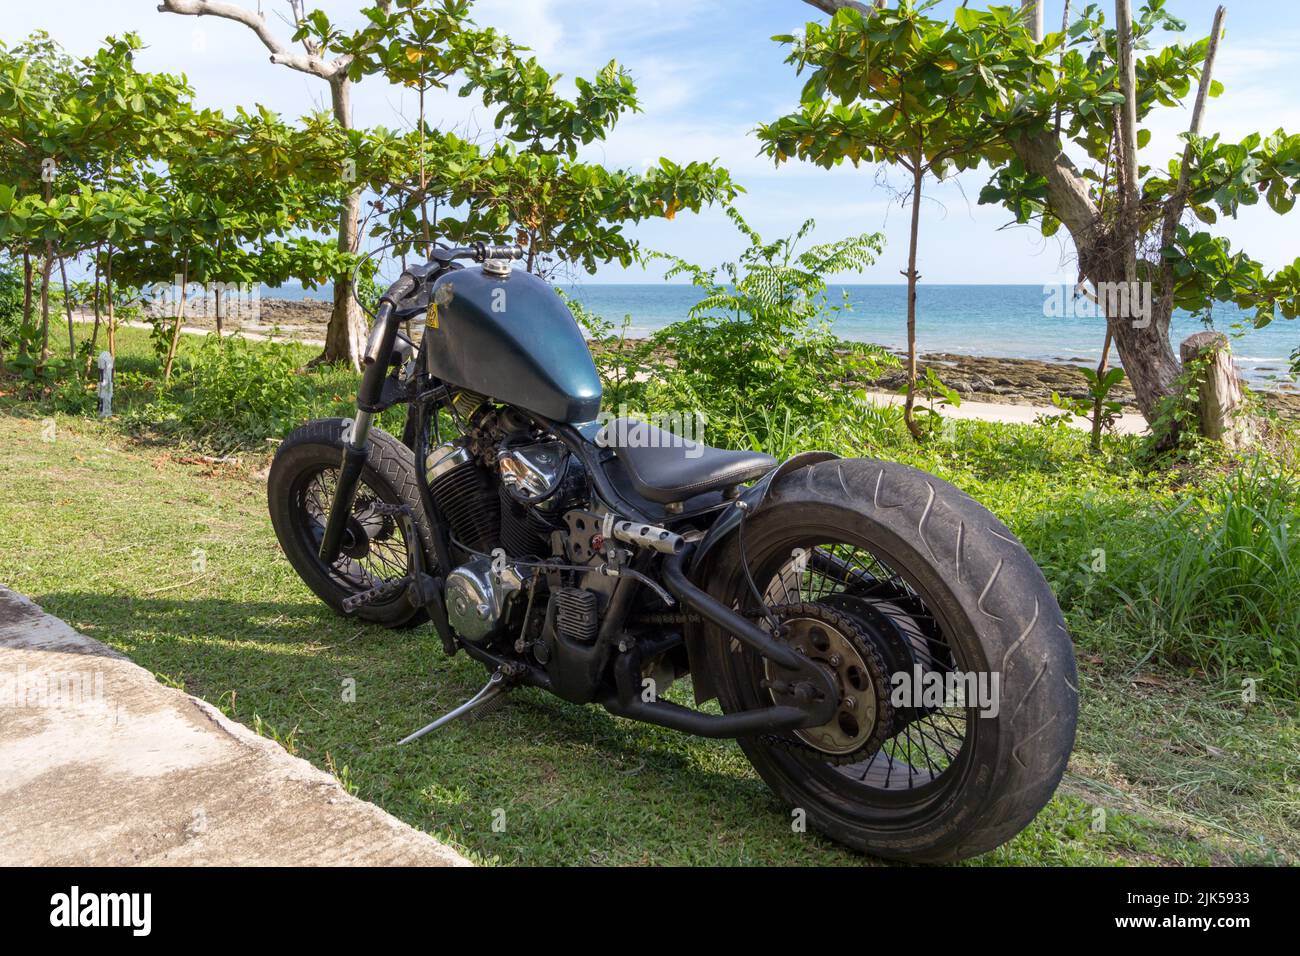 https://c8.alamy.com/comp/2JK5933/a-custom-chopper-motorbike-parked-on-grass-next-to-a-tropical-beach-rat-bike-low-rider-honda-engine-2JK5933.jpg